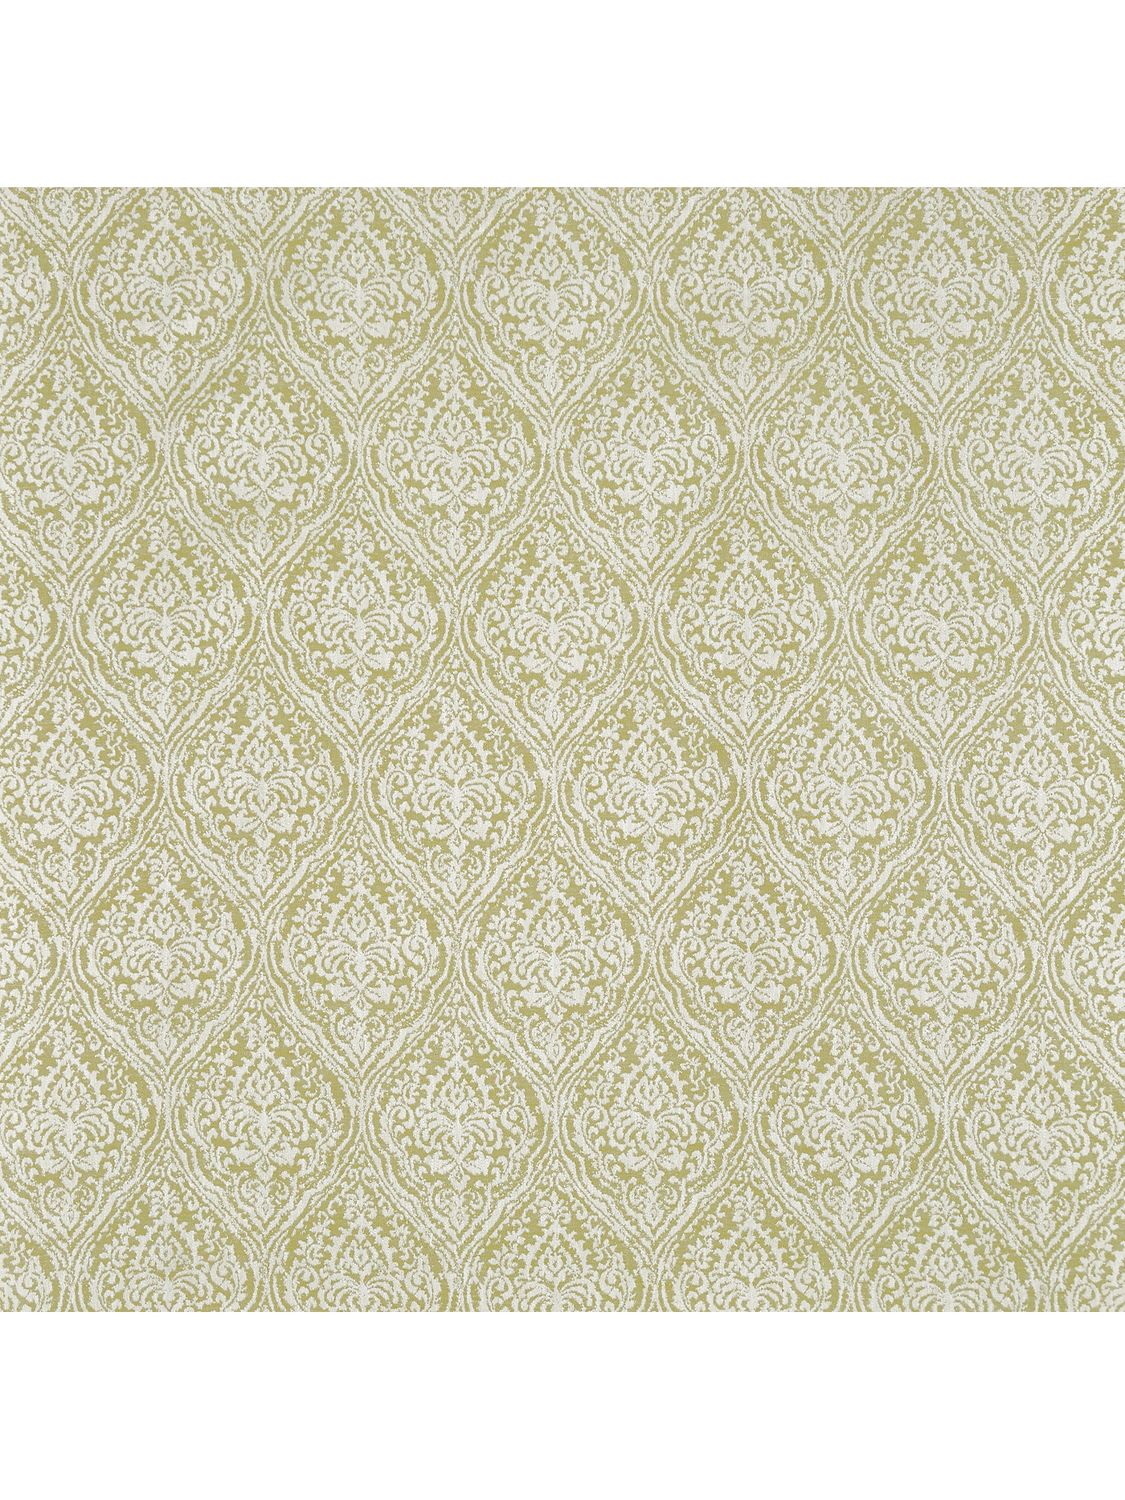 Prestigious Textiles Rosemoor Furnishing Fabric, Zest